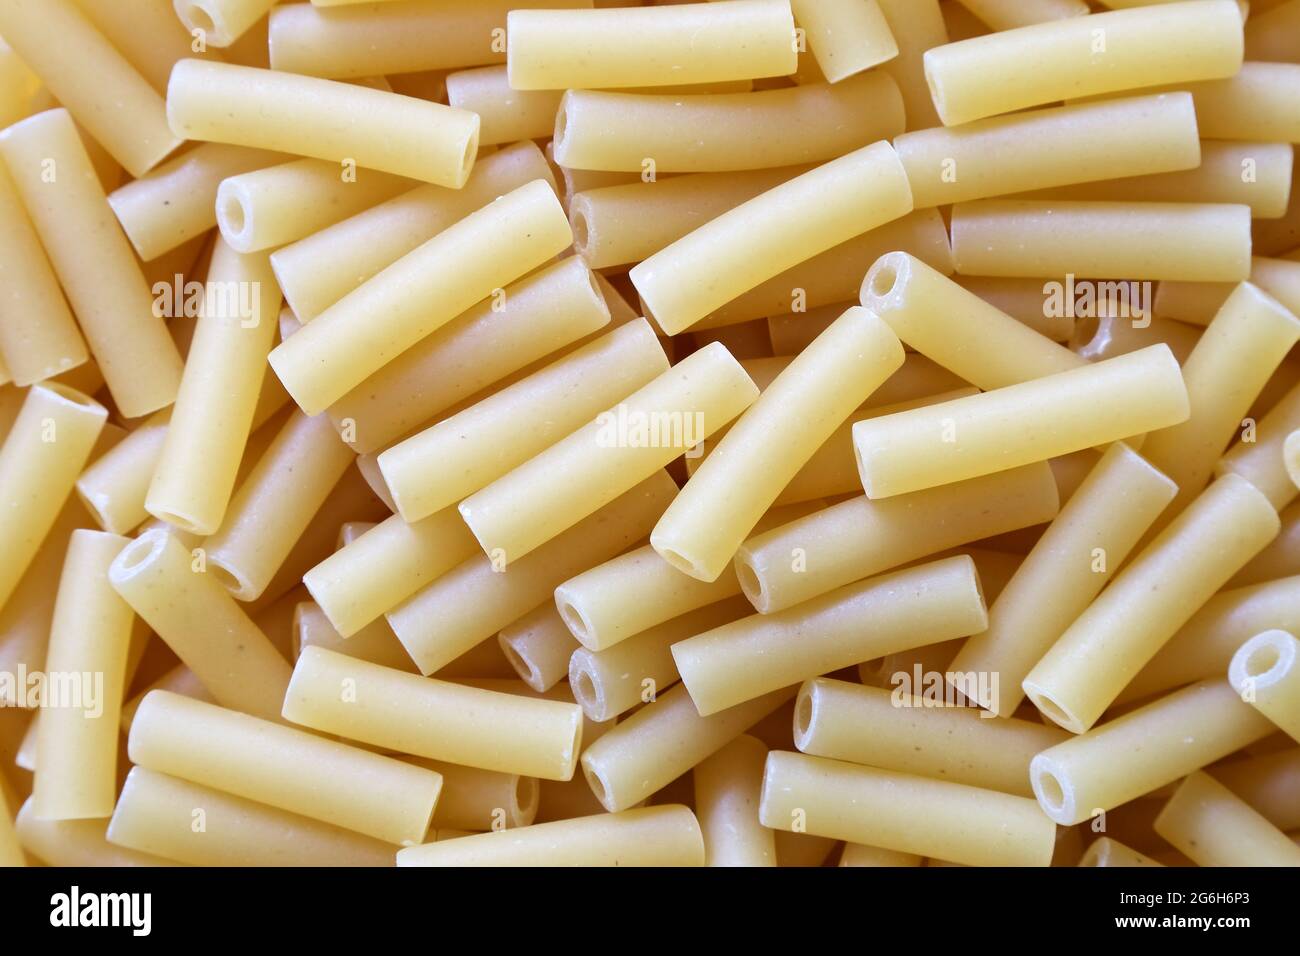 Pasta formed into tubes to make macaroni. Stock Photo